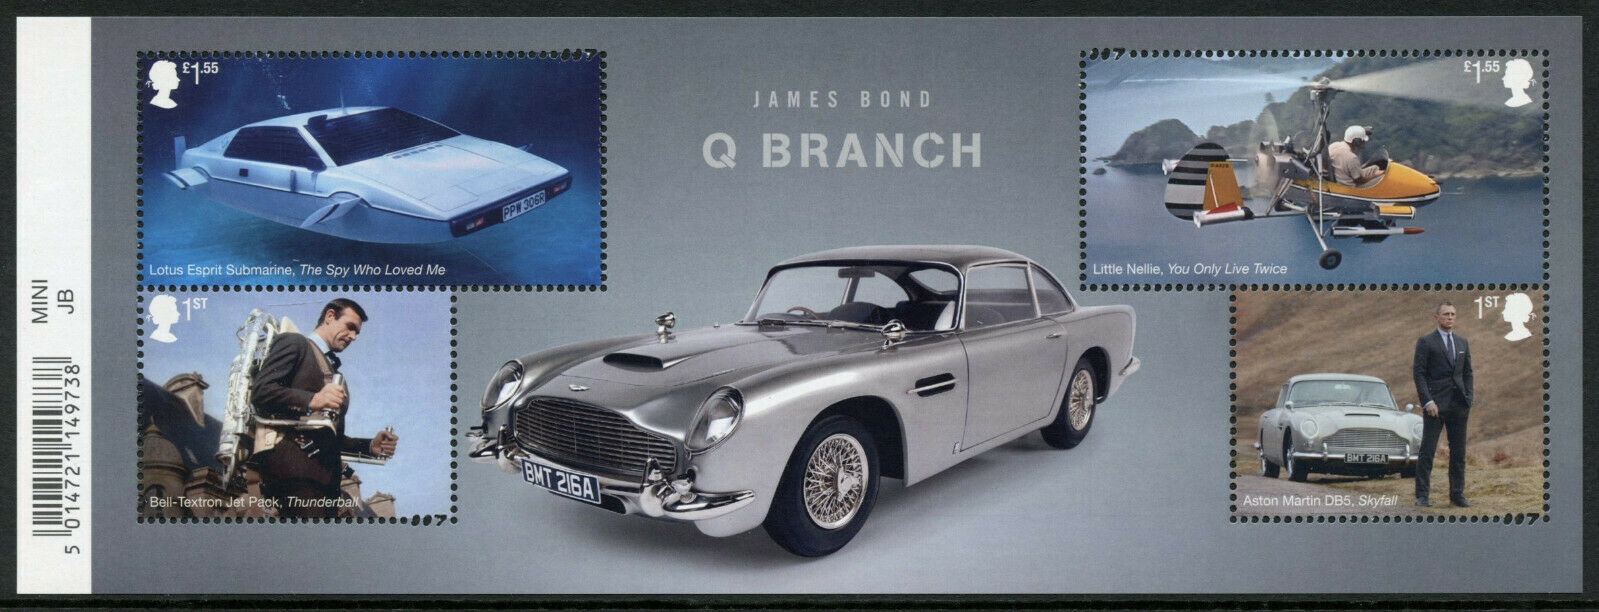 GB James Bond Stamps 2020 MNH Daniel Craig Aston Martin Lotus Cars 4v M/S